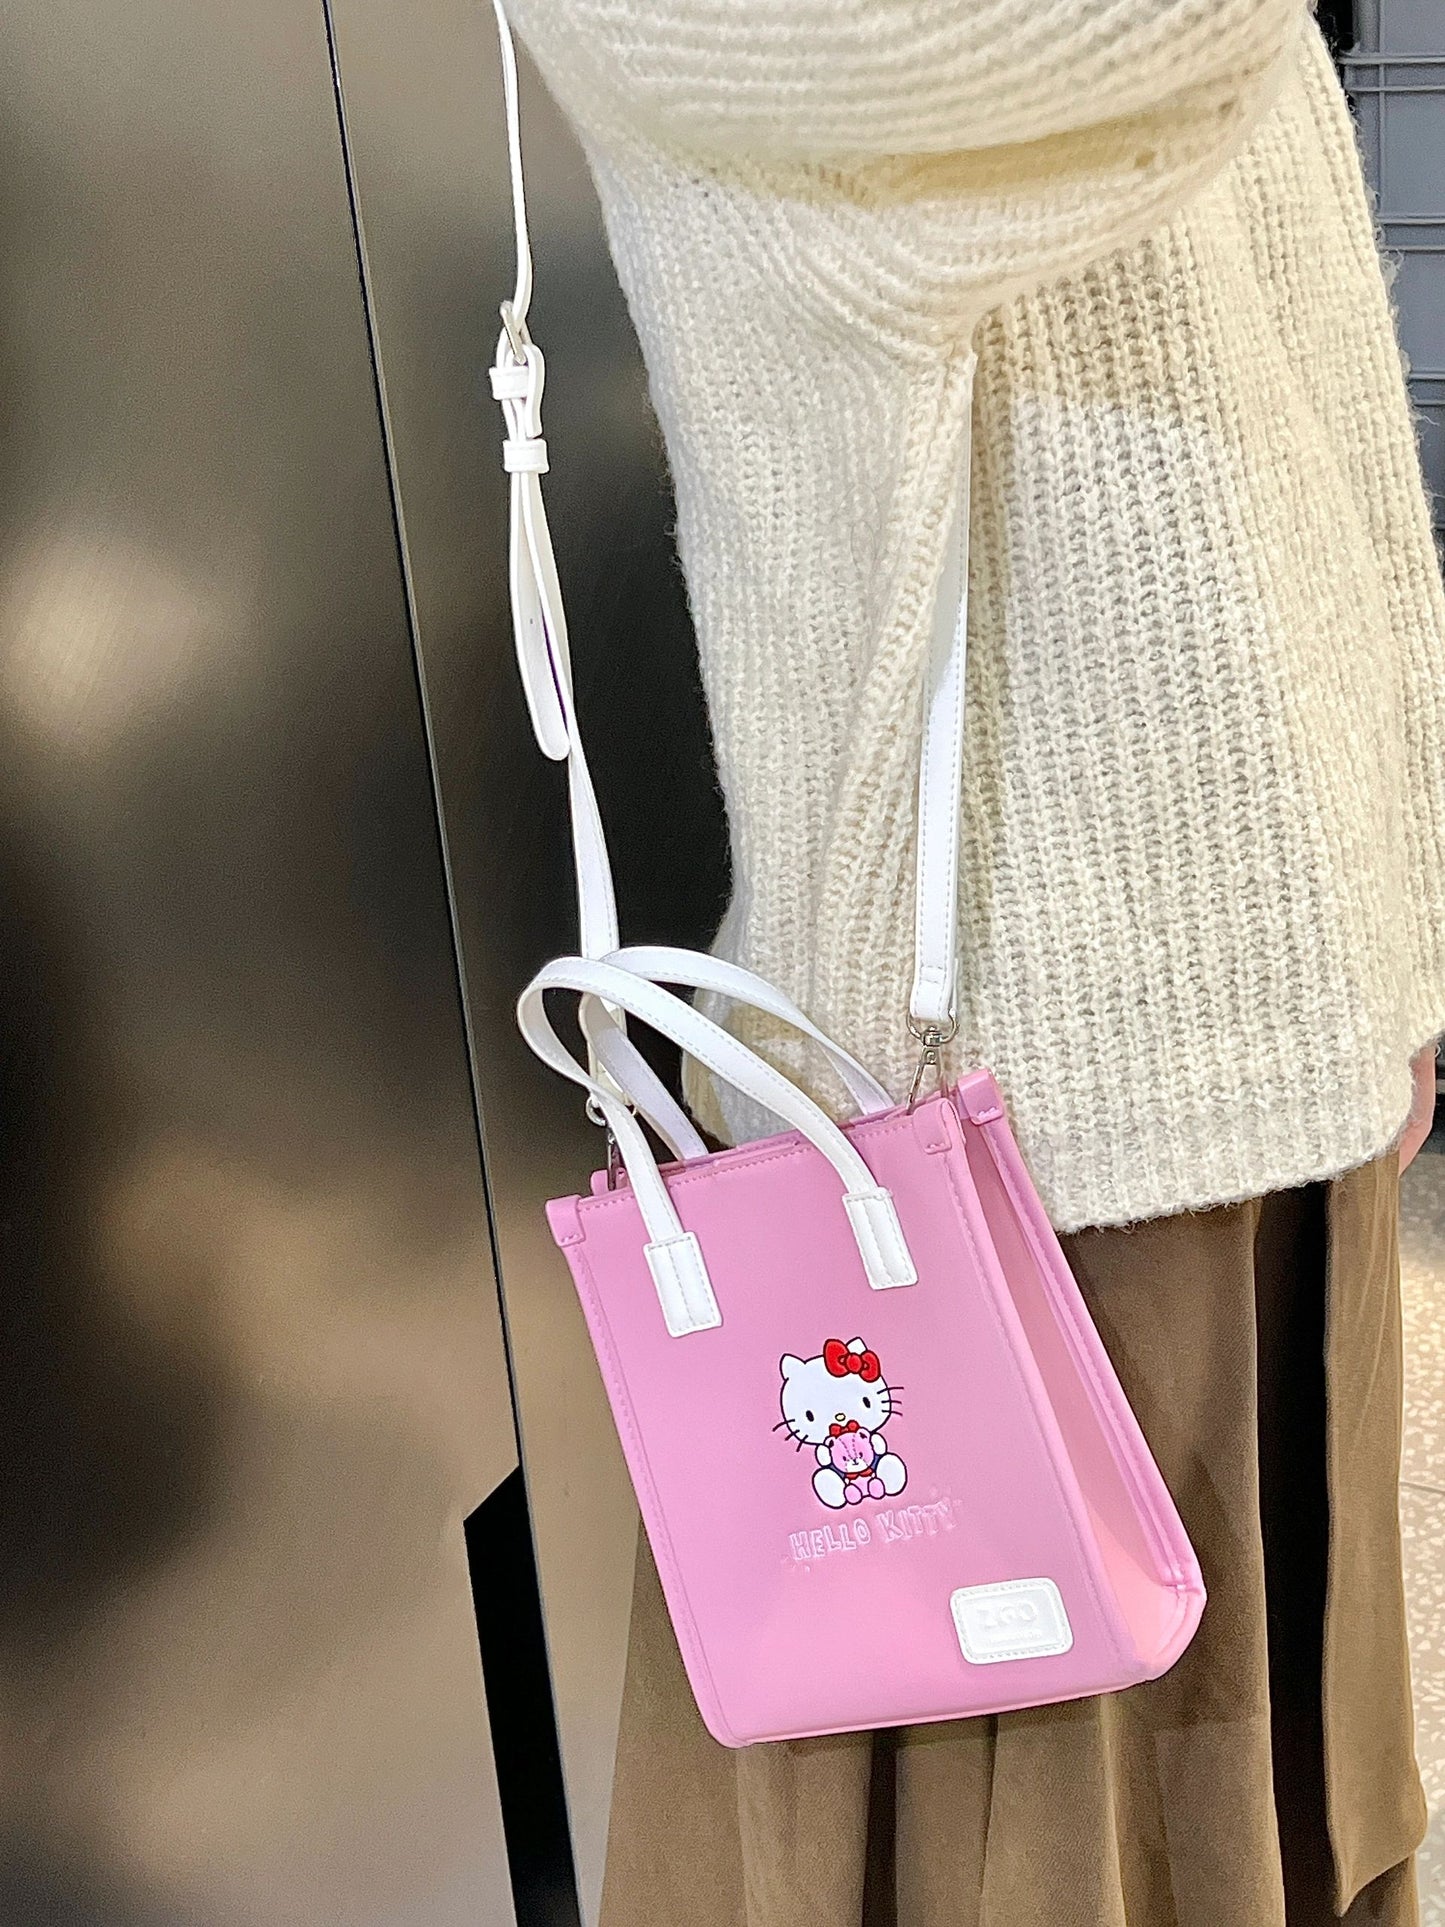 Sanrio PU Leather Top Handle Satchel Handbags for Women Cute Tote Purse Hobo Crossbody Shoulder bags（gift box packaging）